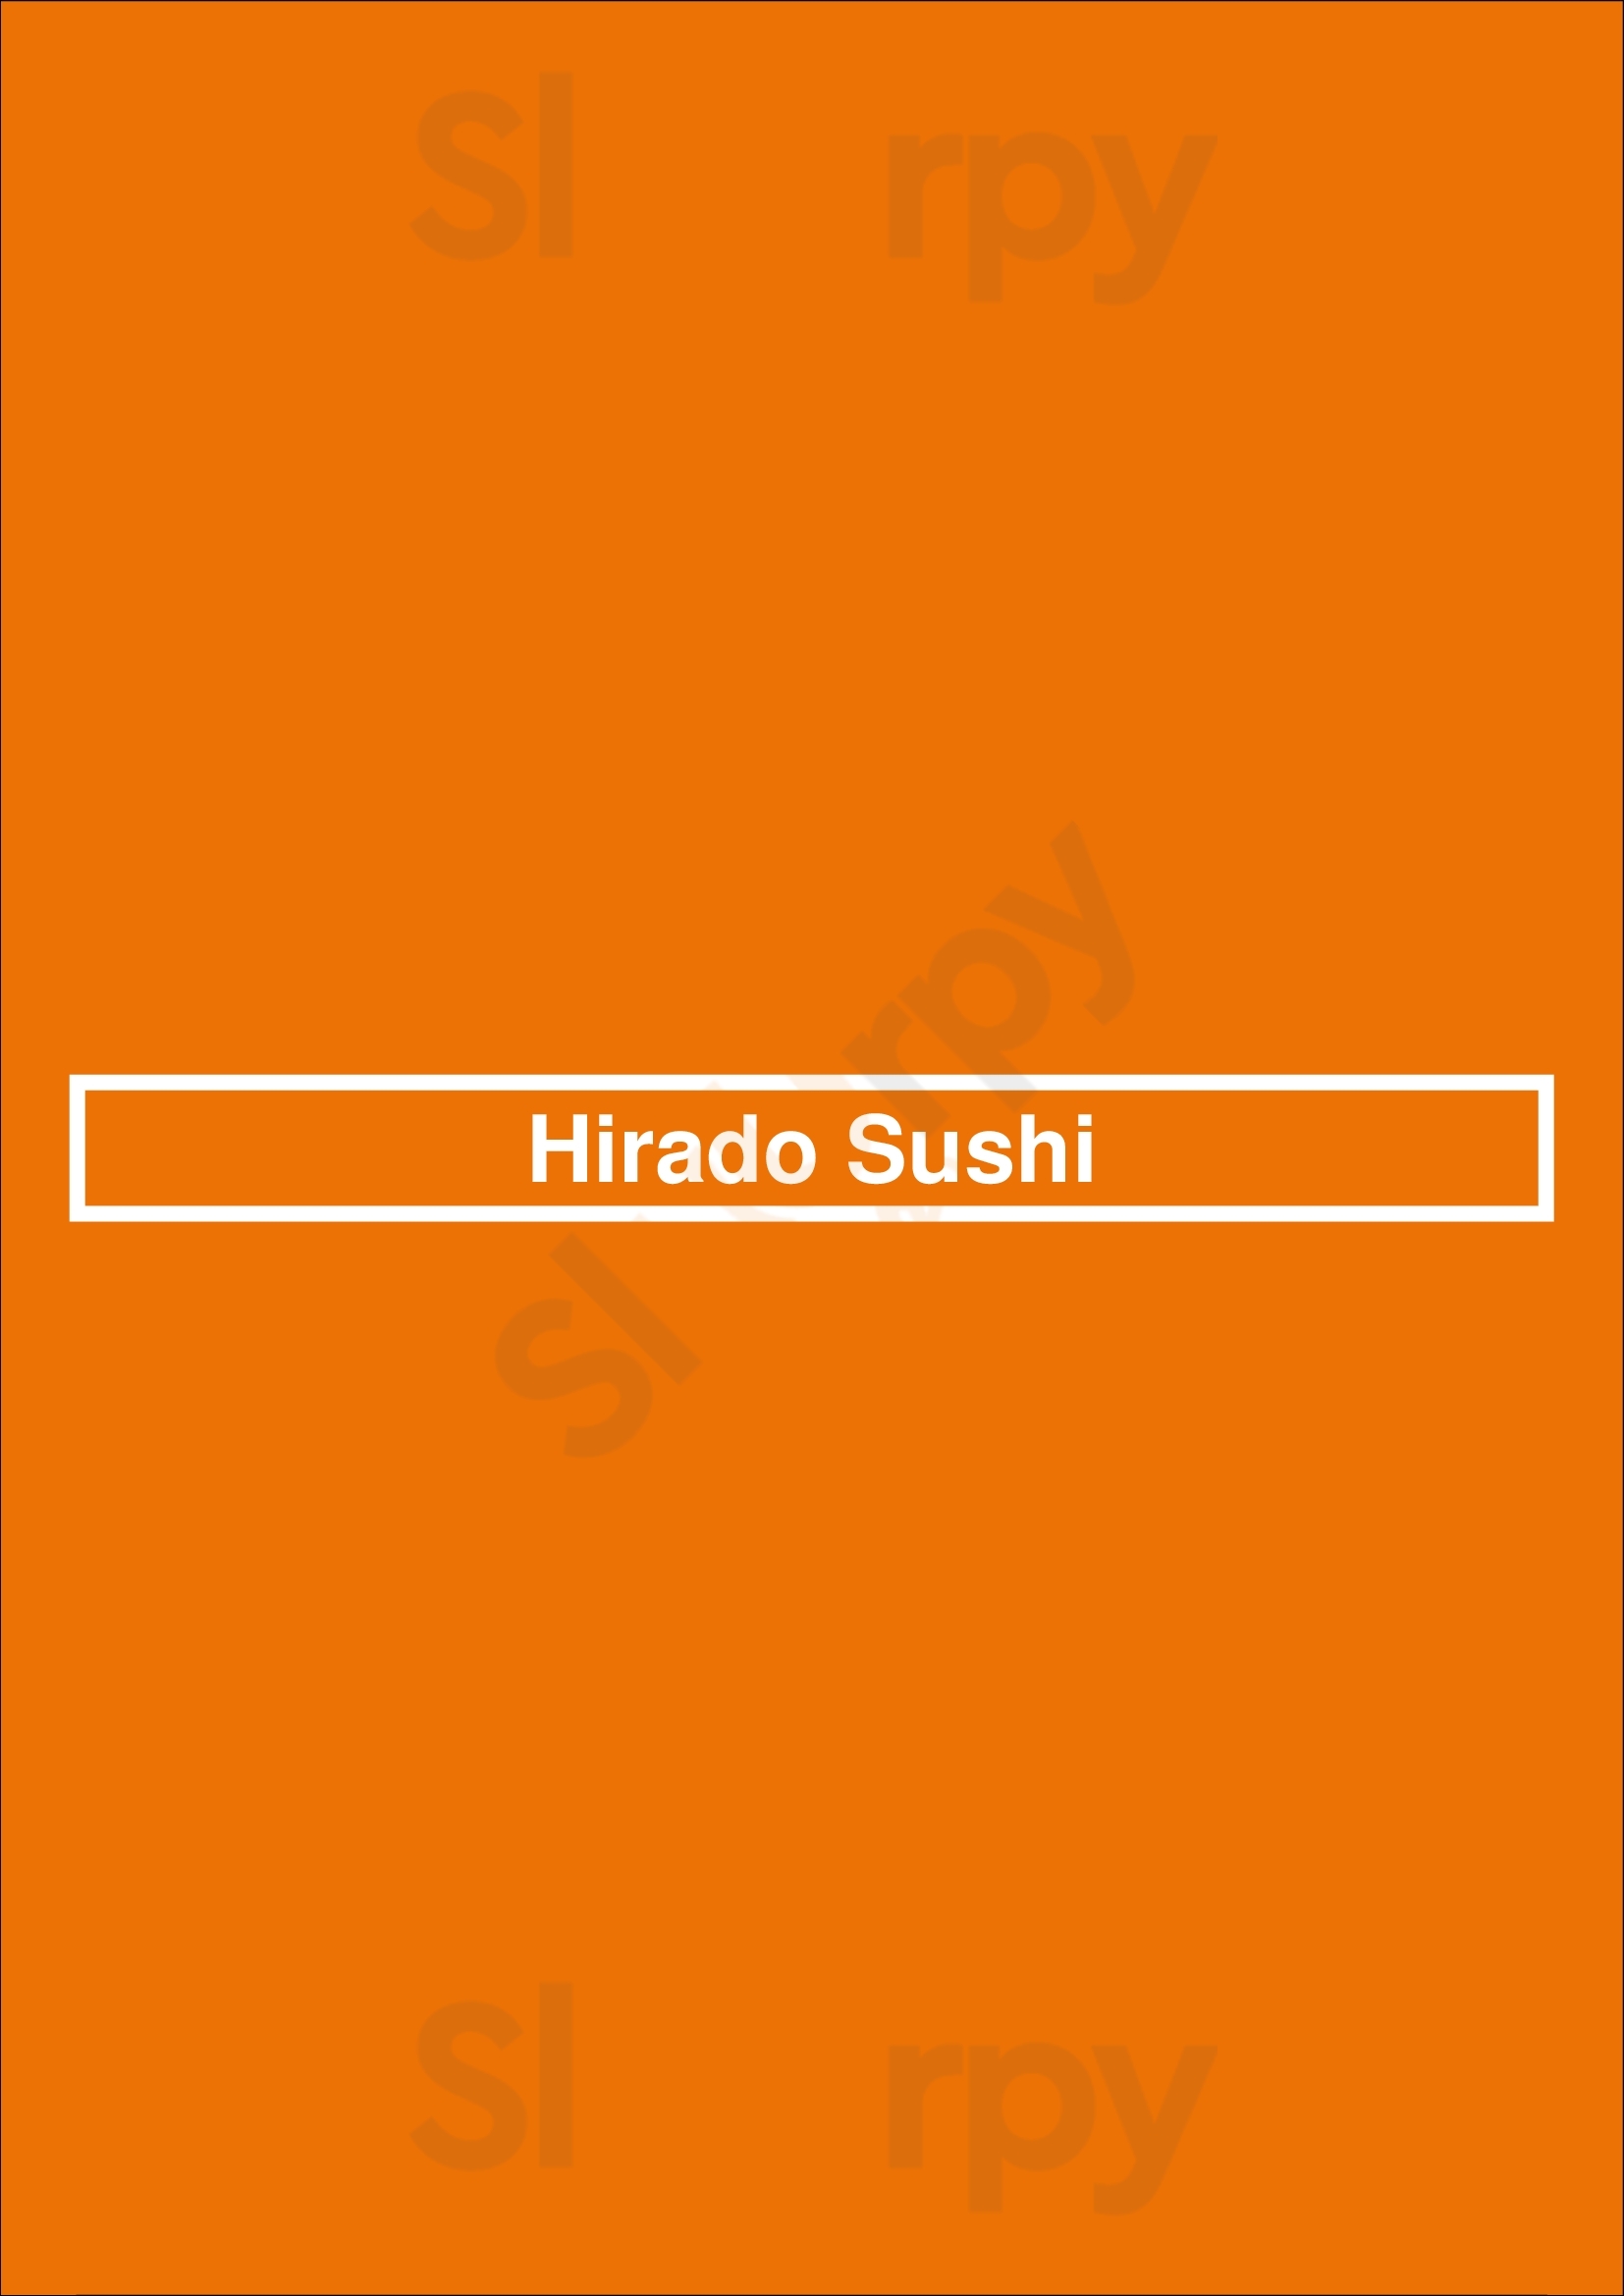 Hirado Sushi Vancouver Menu - 1